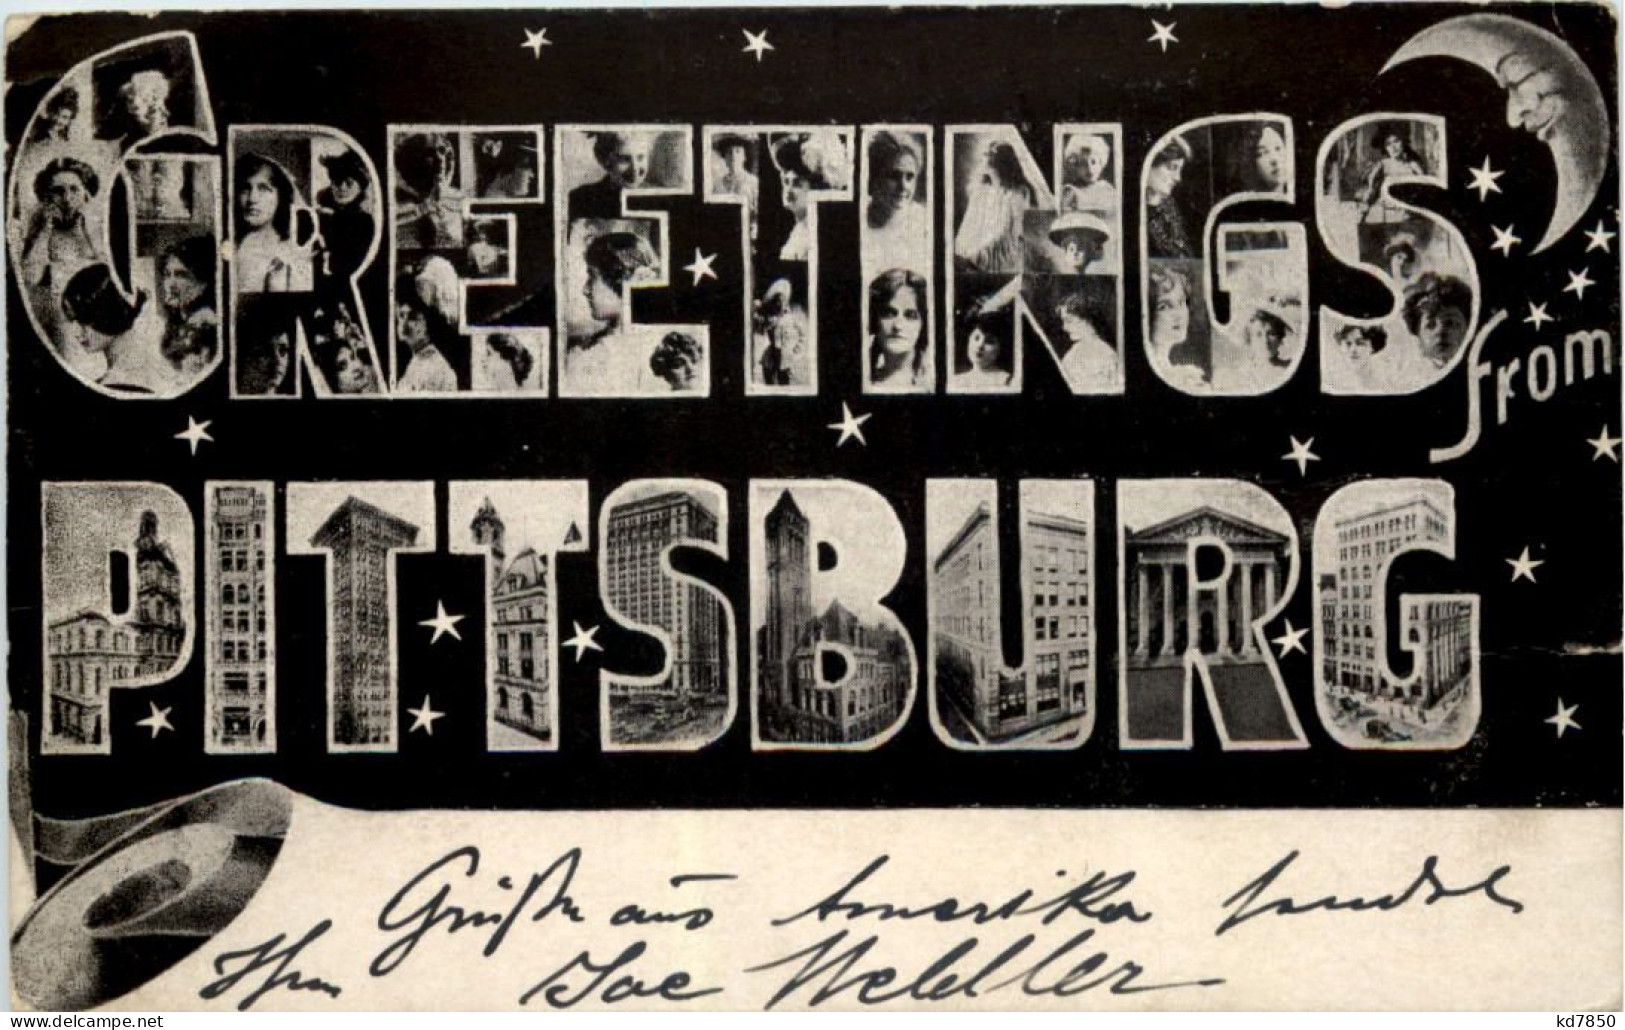 Greetings From Pittsburg Pa. - Philadelphia